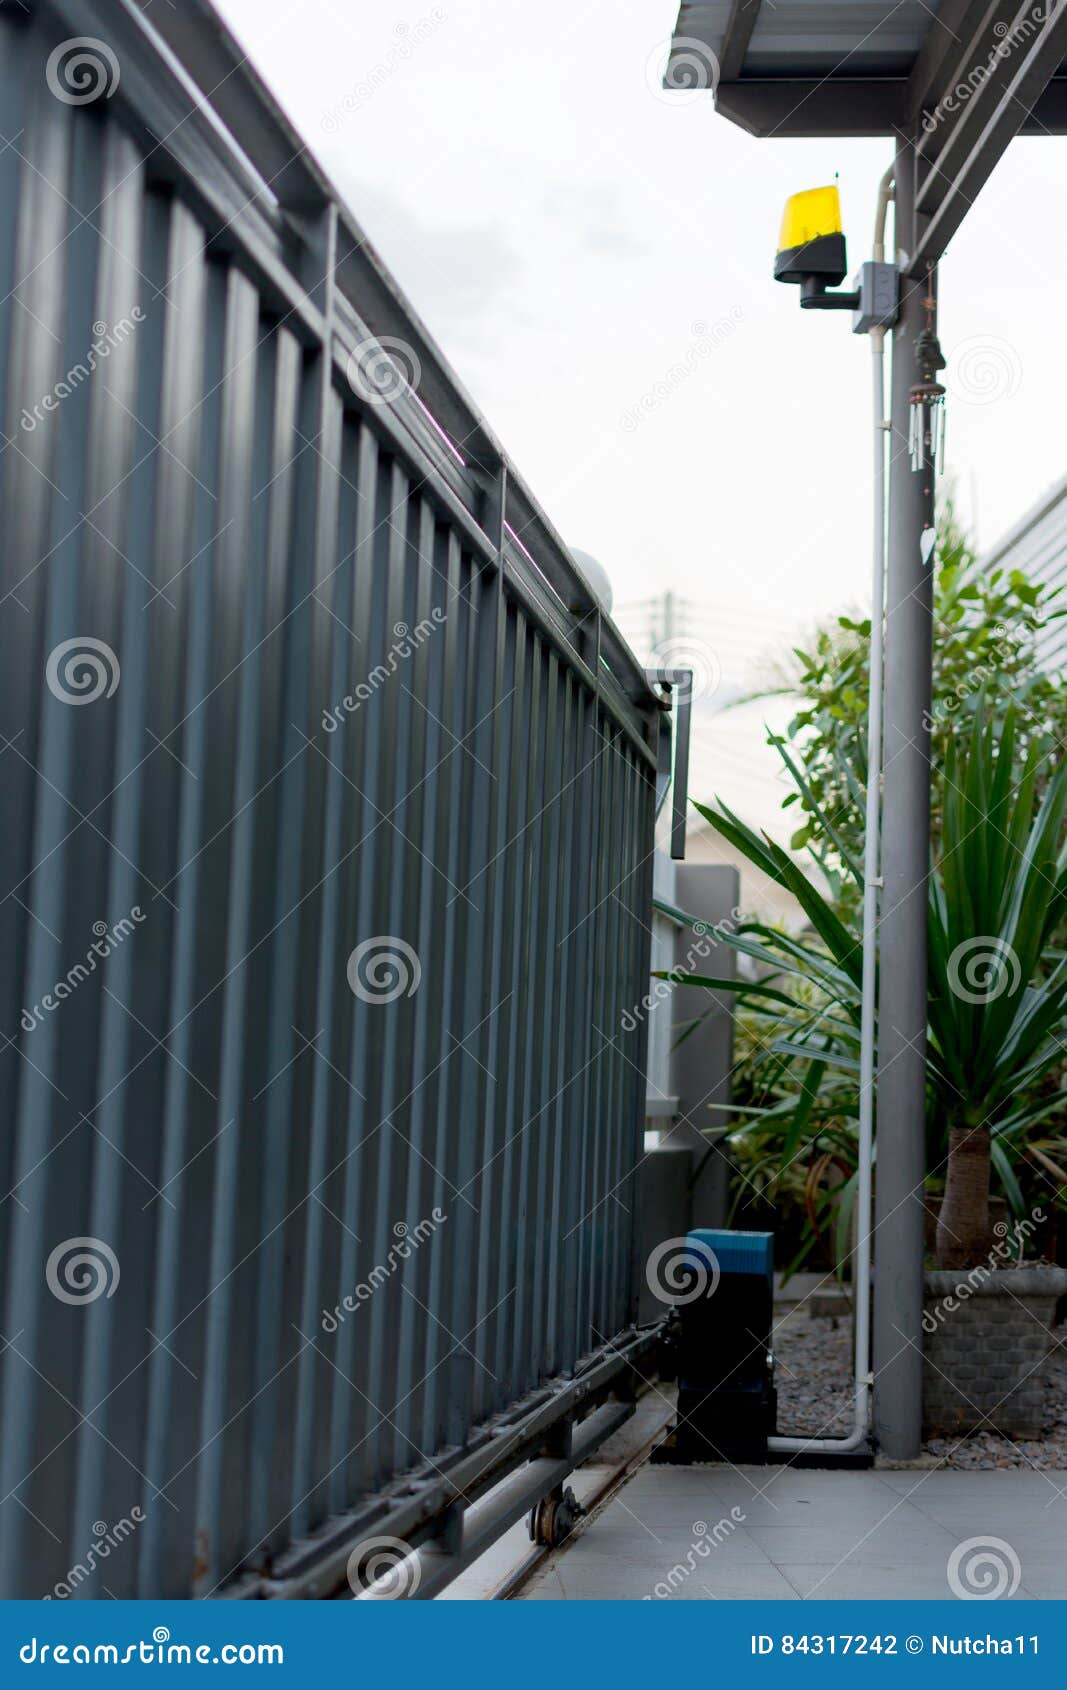 automatic slide house metal gates